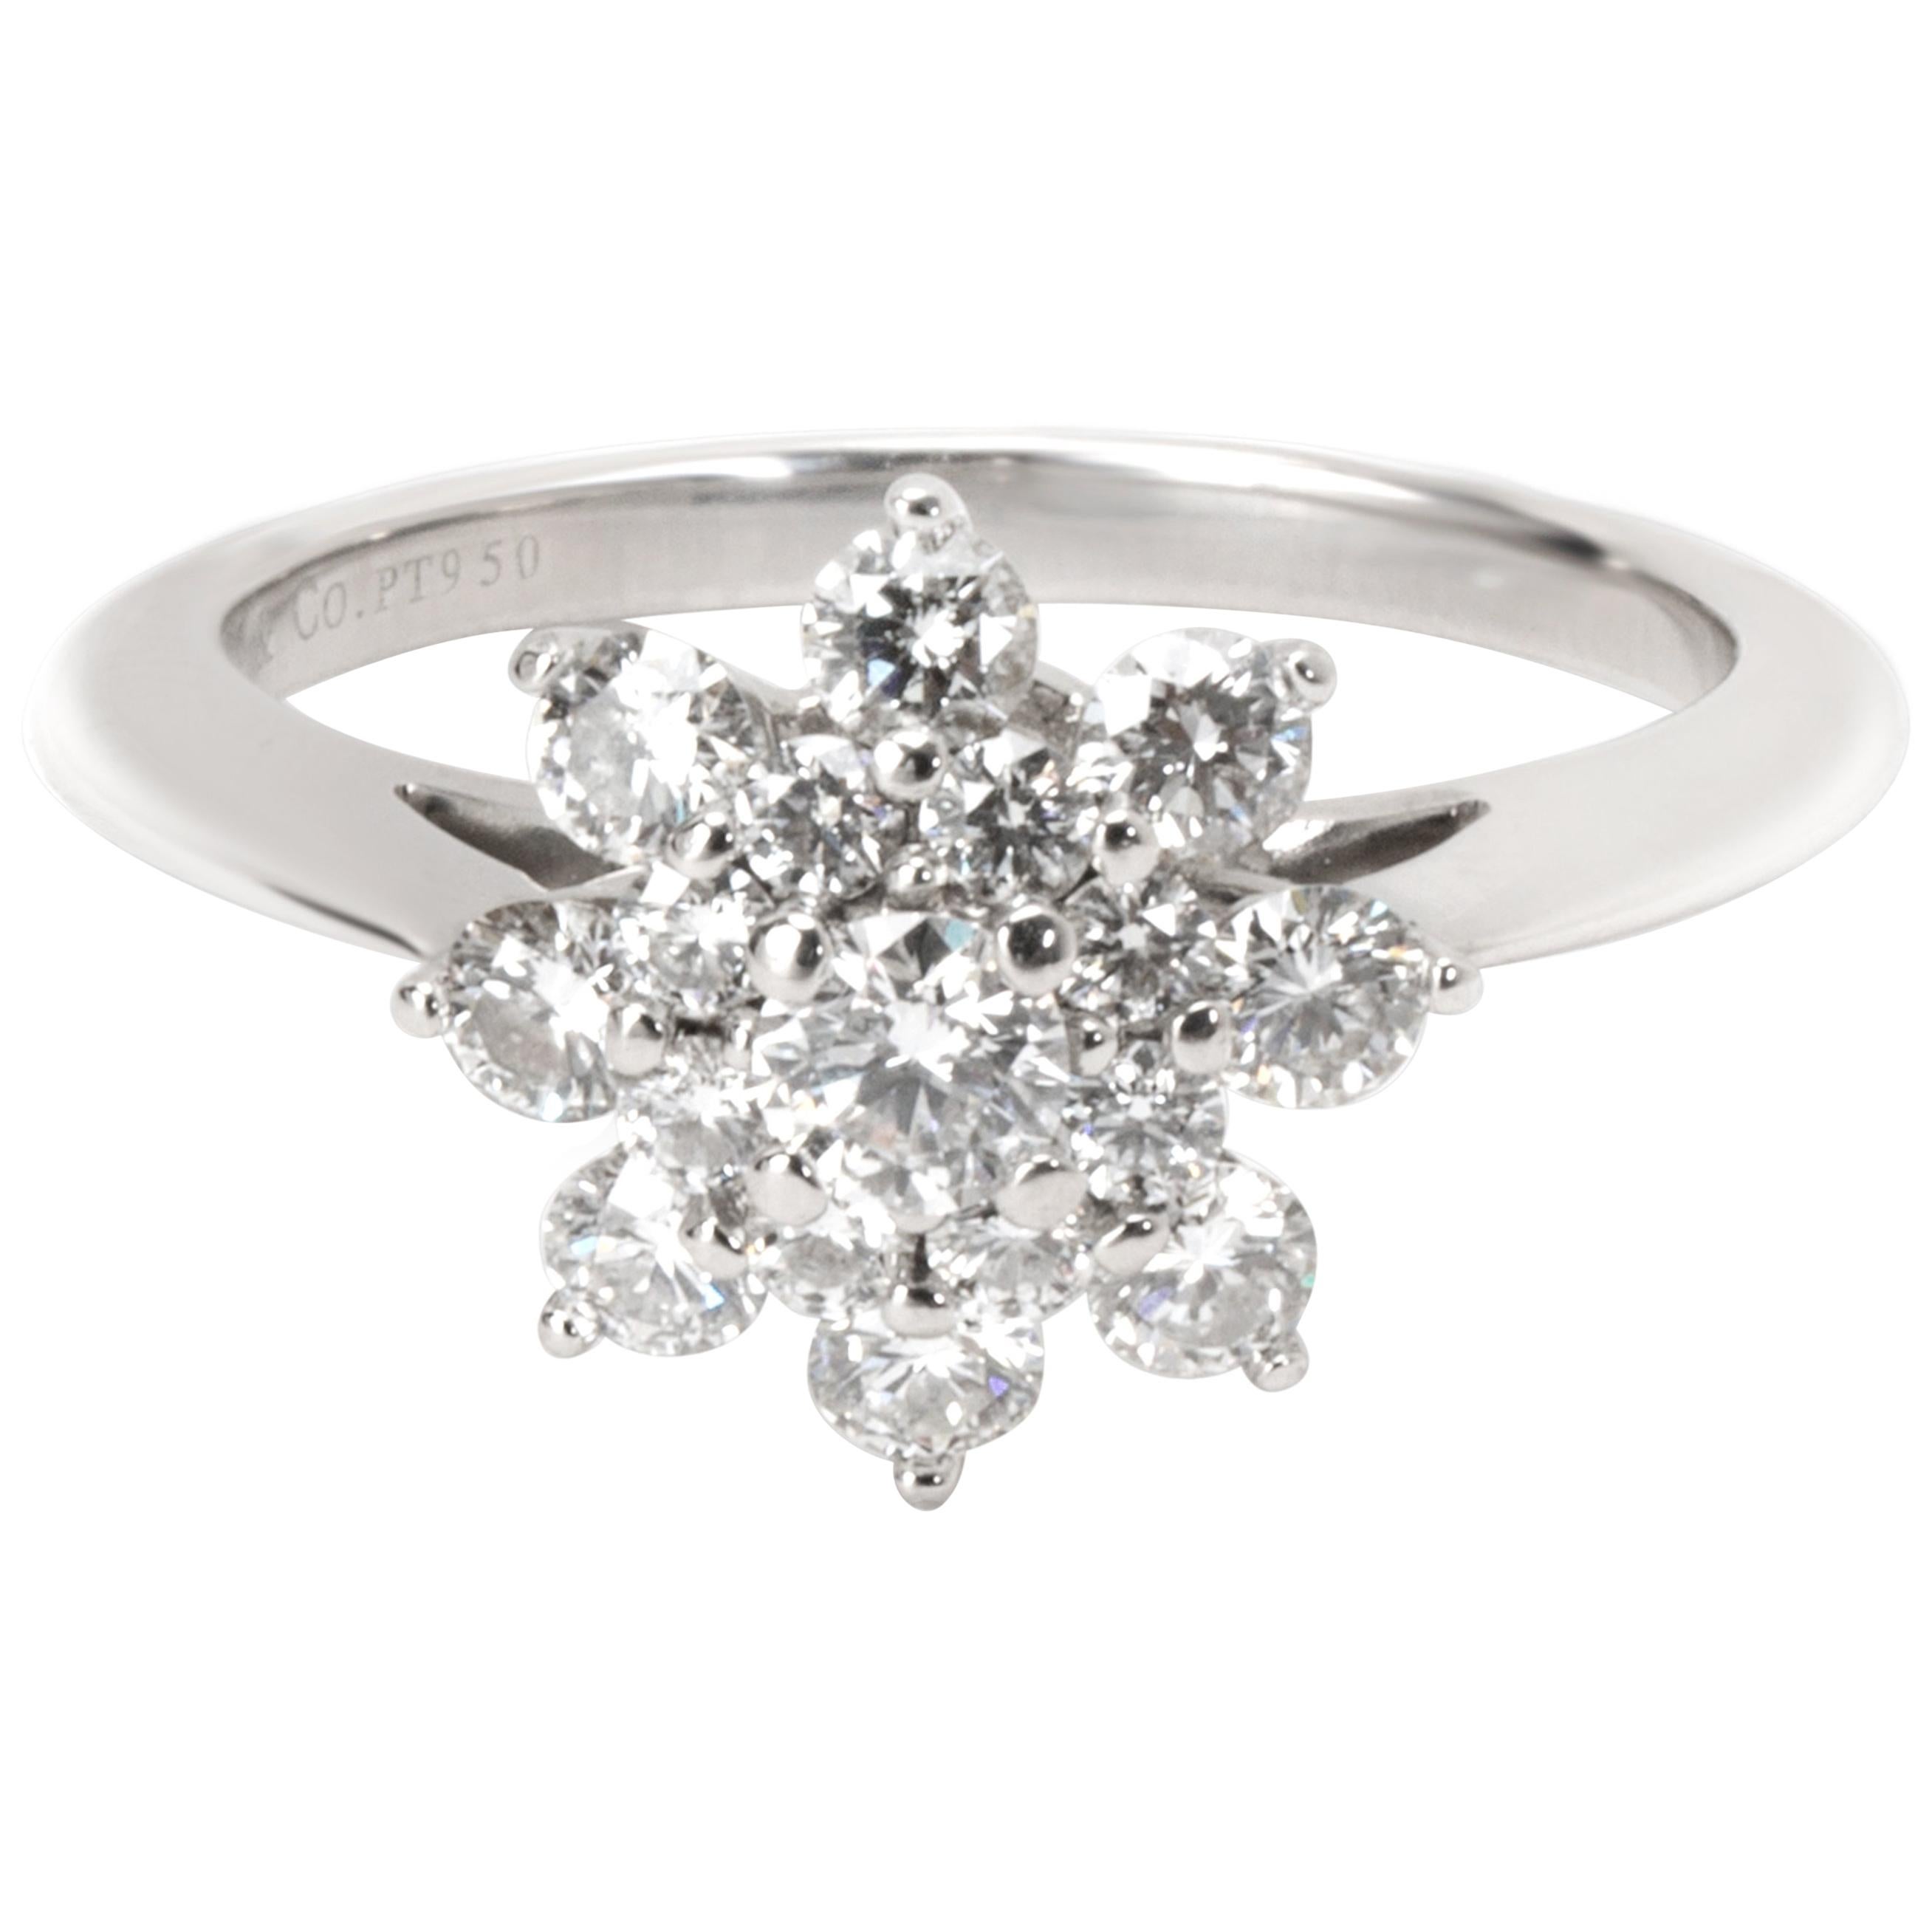 Tiffany & Co. Diamond Flower Ring in Platinum 0.60 Carat